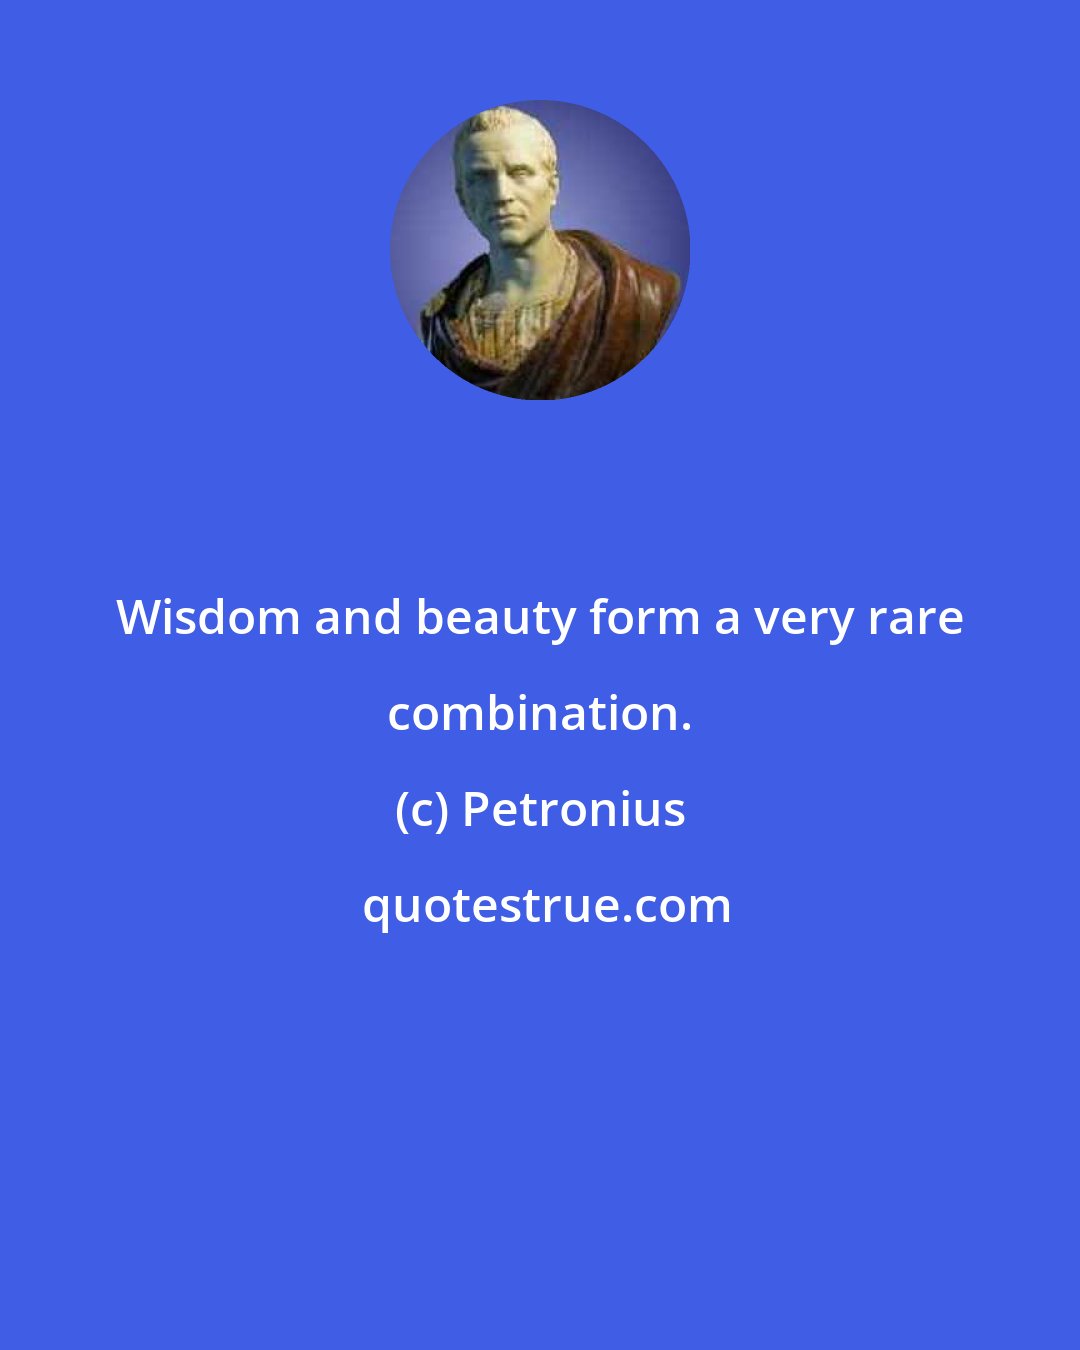 Petronius: Wisdom and beauty form a very rare combination.